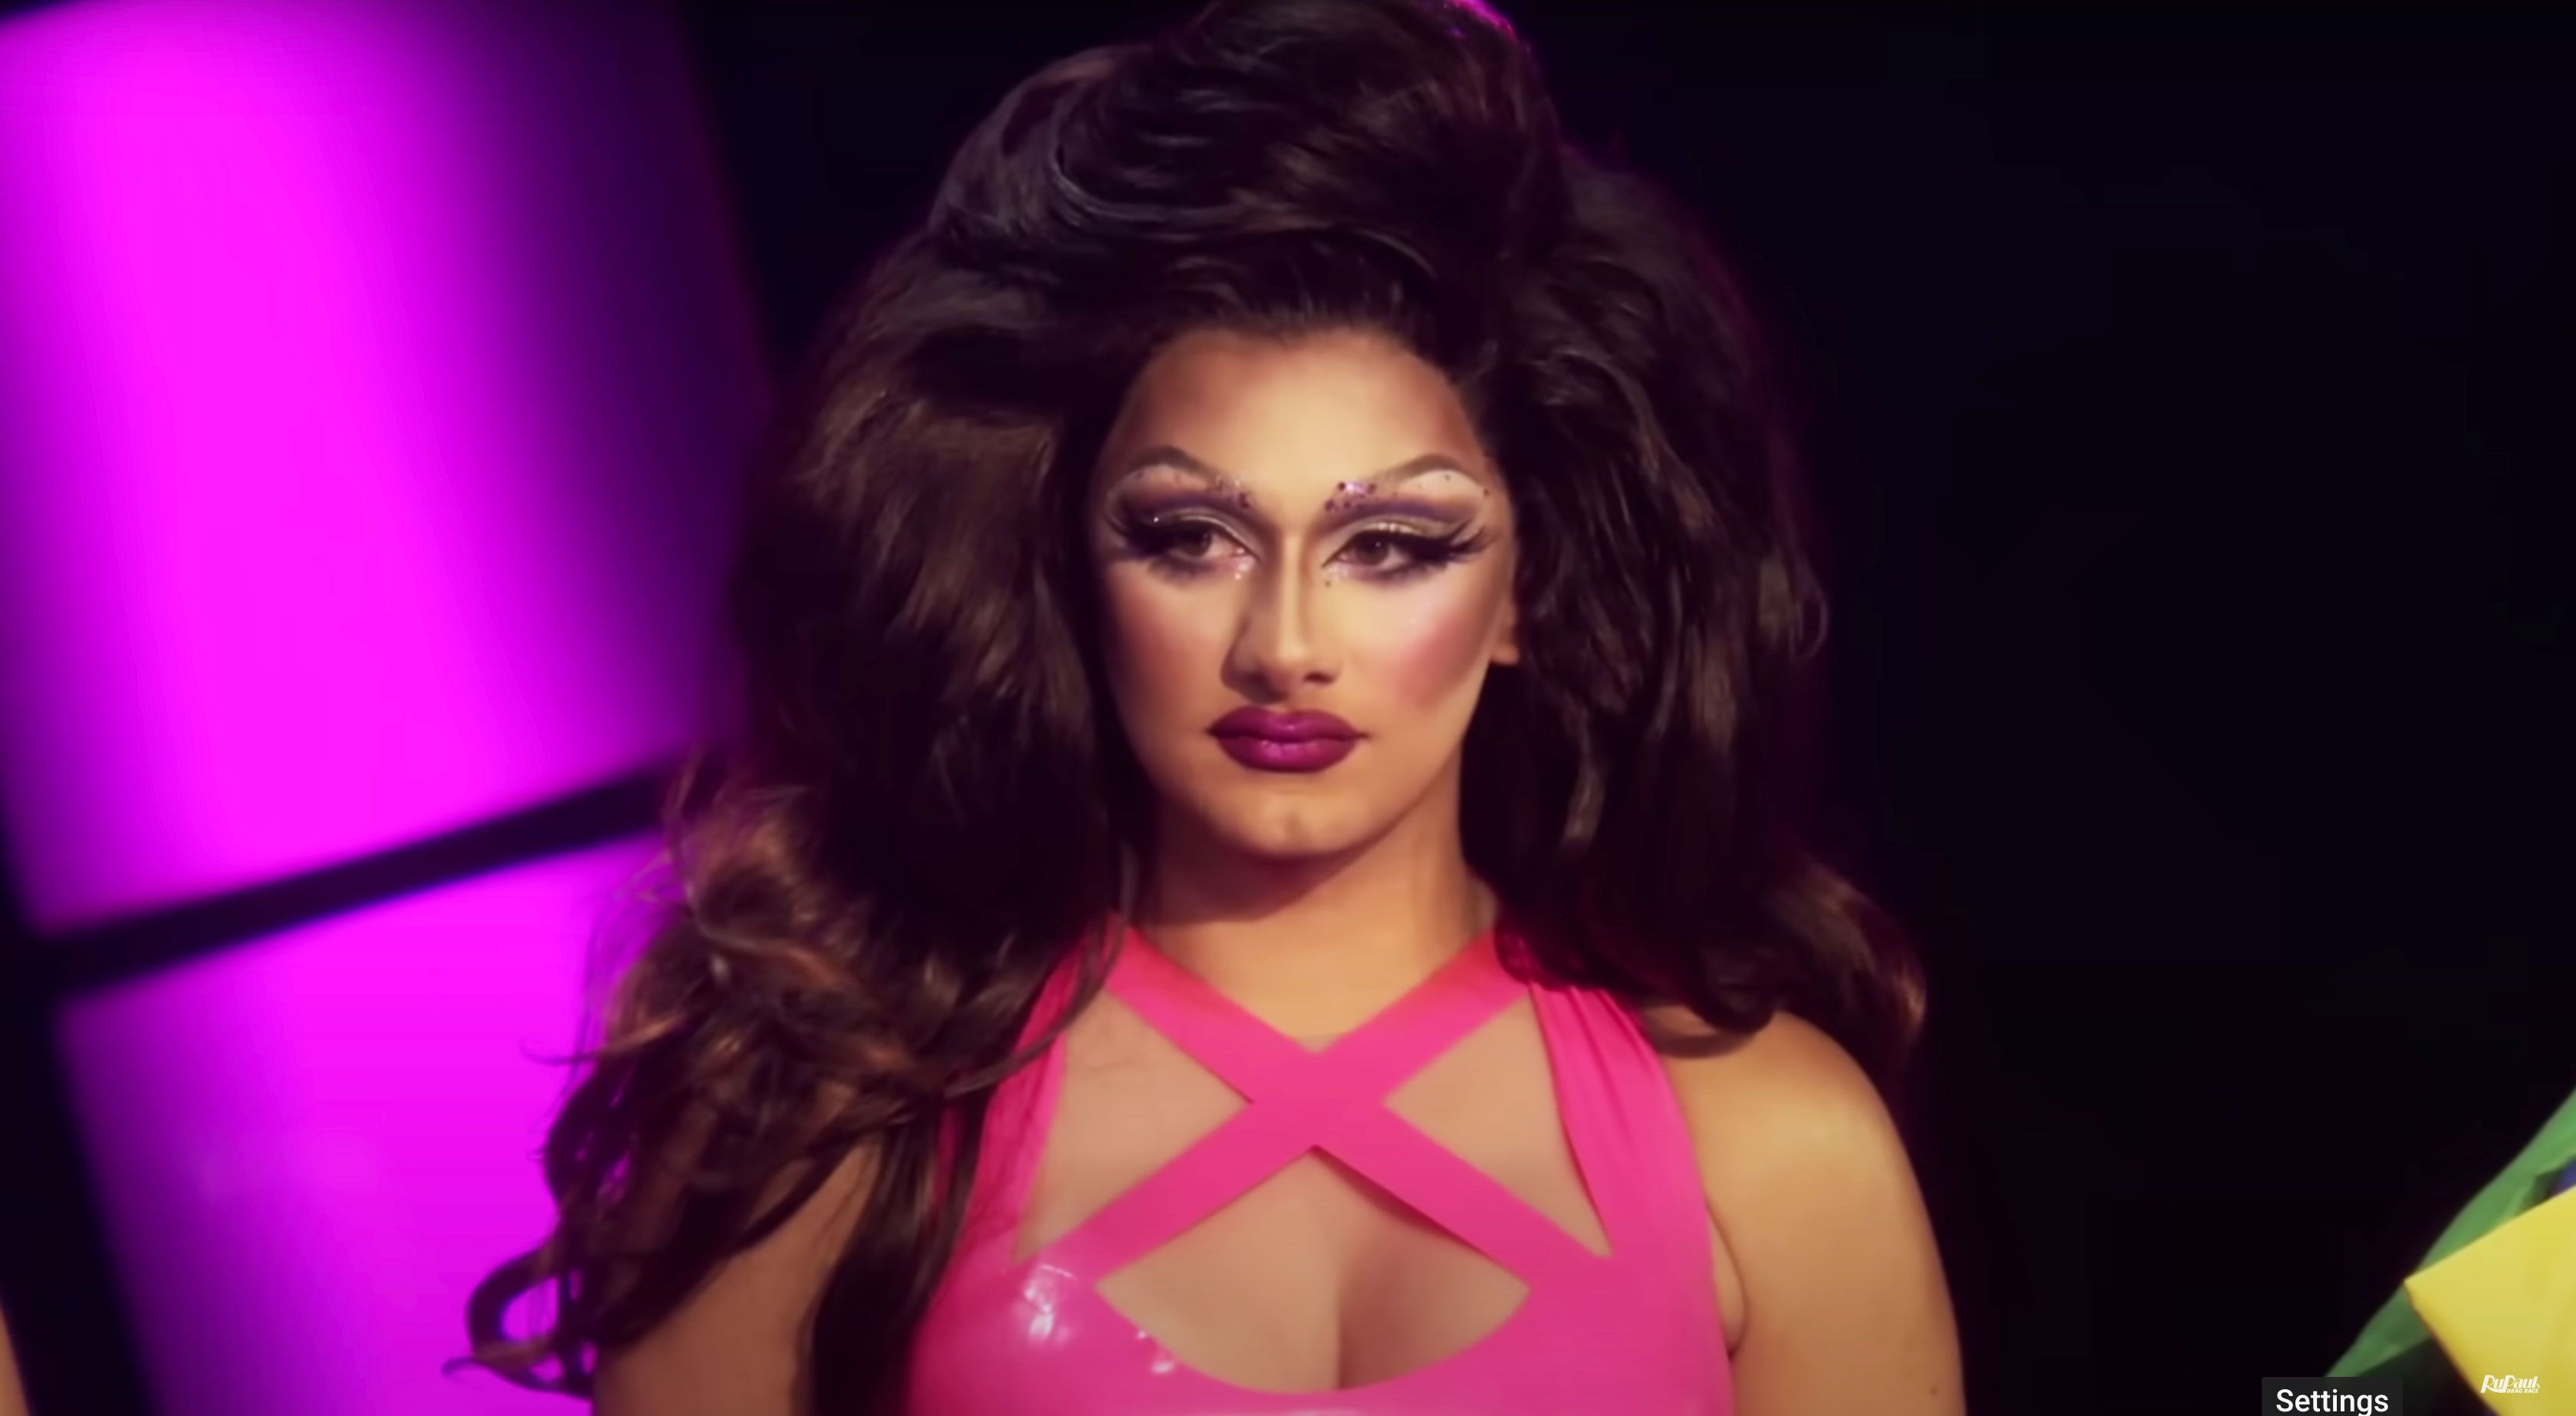 Facekini steals show in RuPaul's Drag Race UK trailer